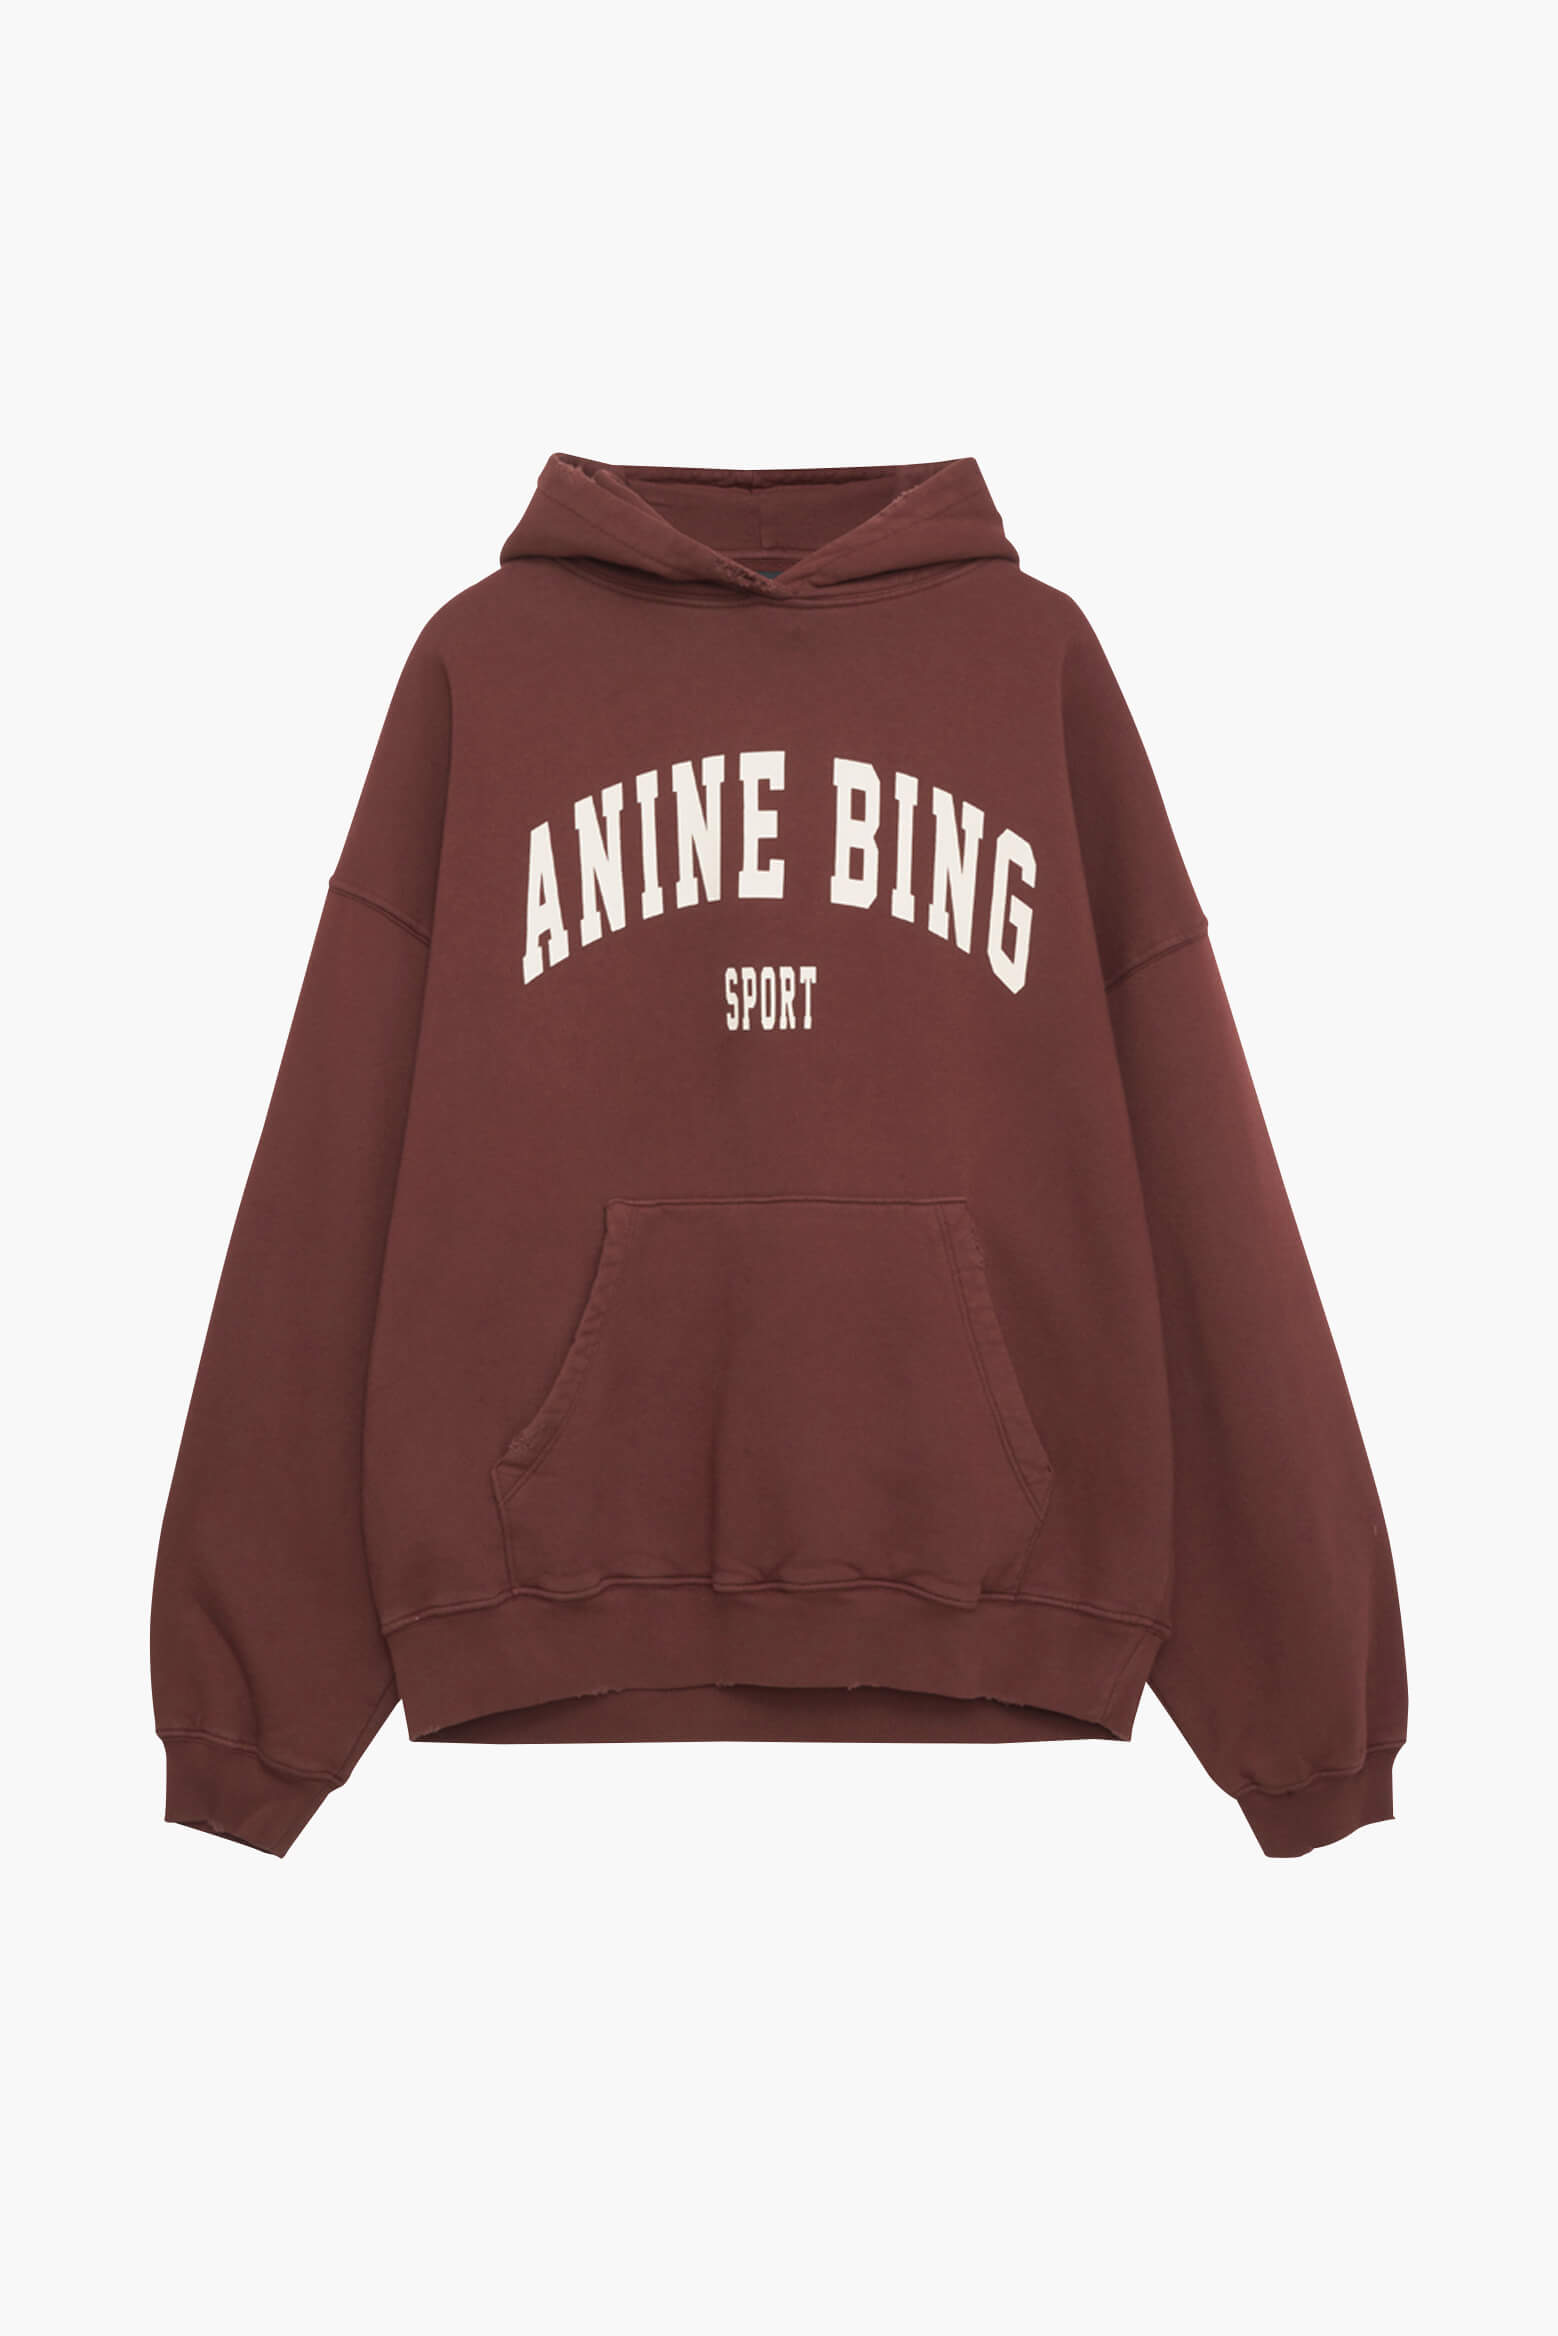 Anine Bing Harvey Sweatshirt in Dark Cherry available at TNT The New Trend Australia